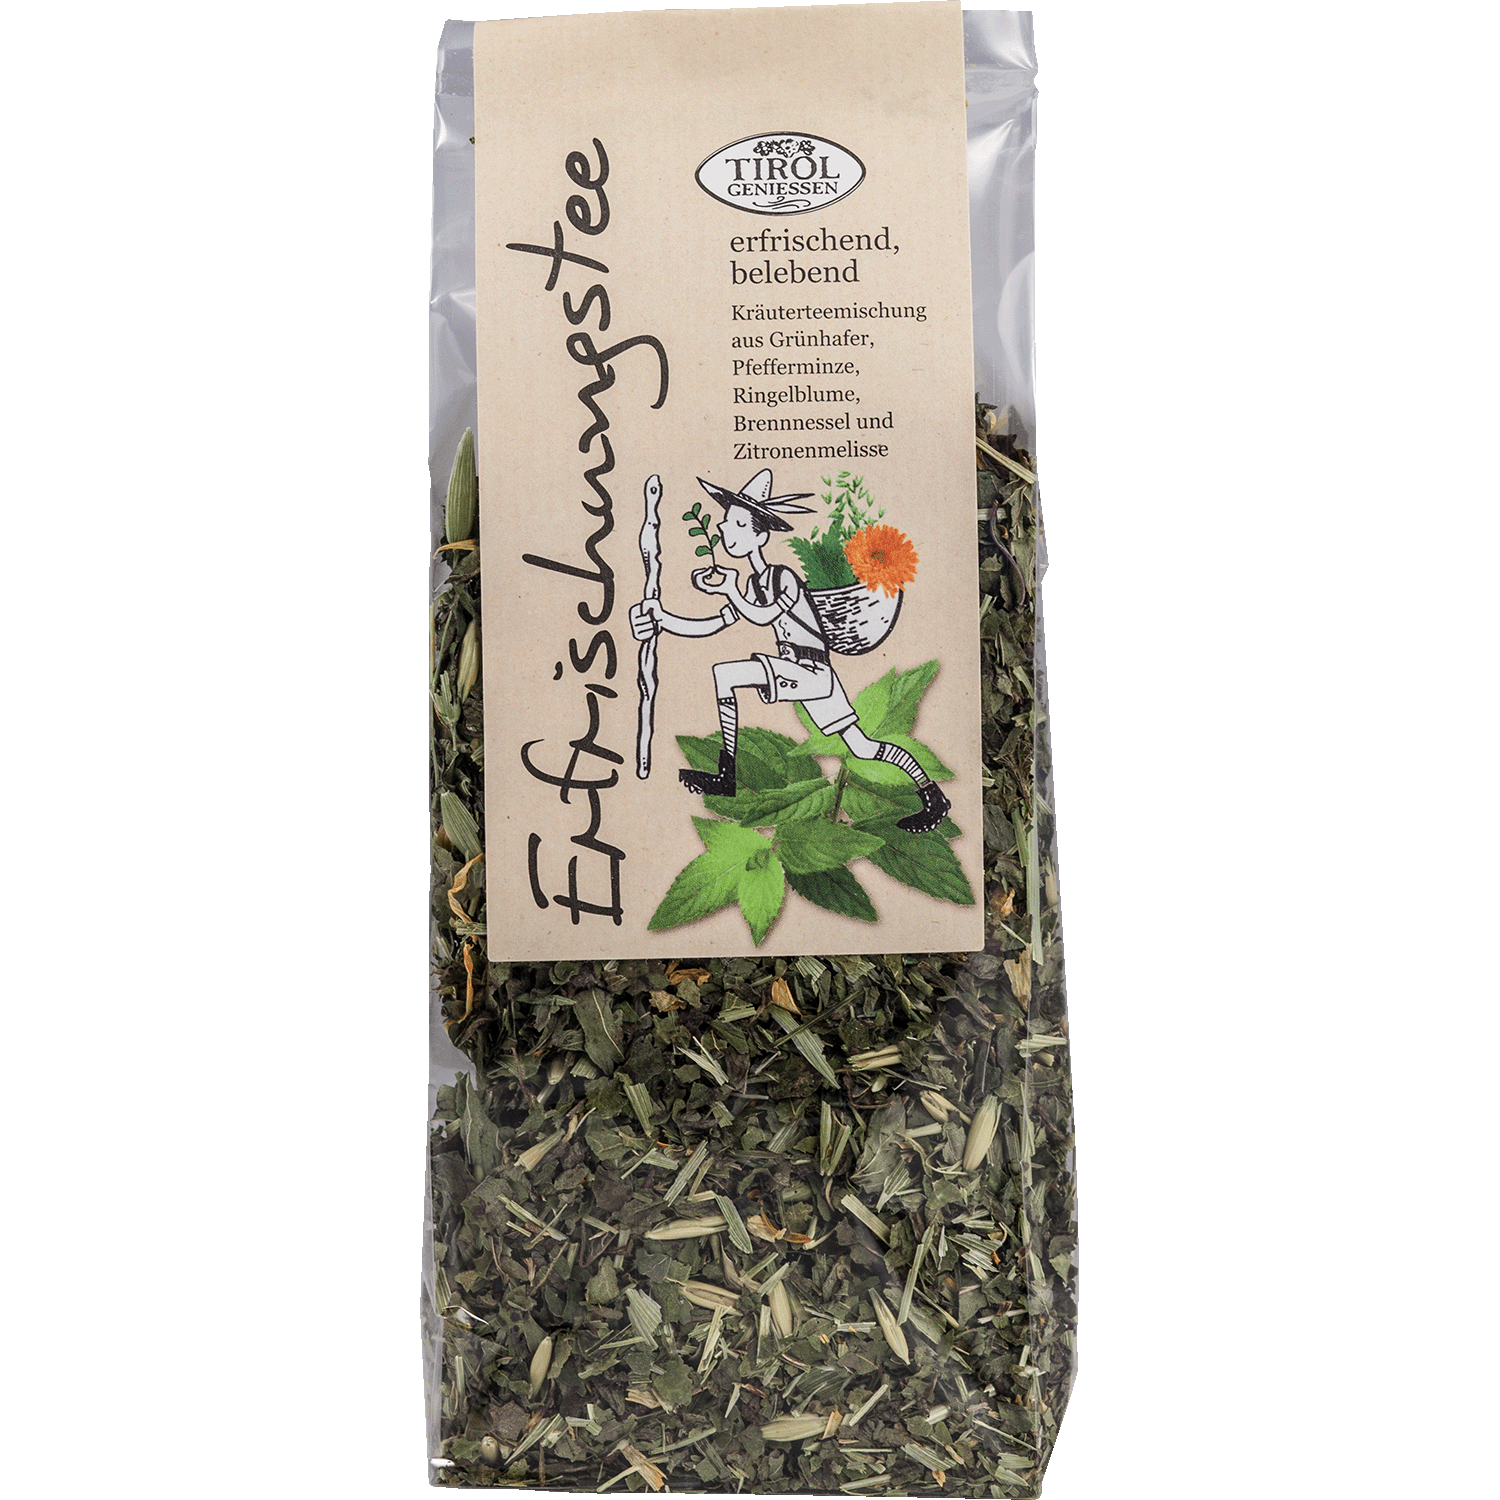 Natural refreshing herbal tea from Tyrol - Tirol geniessen